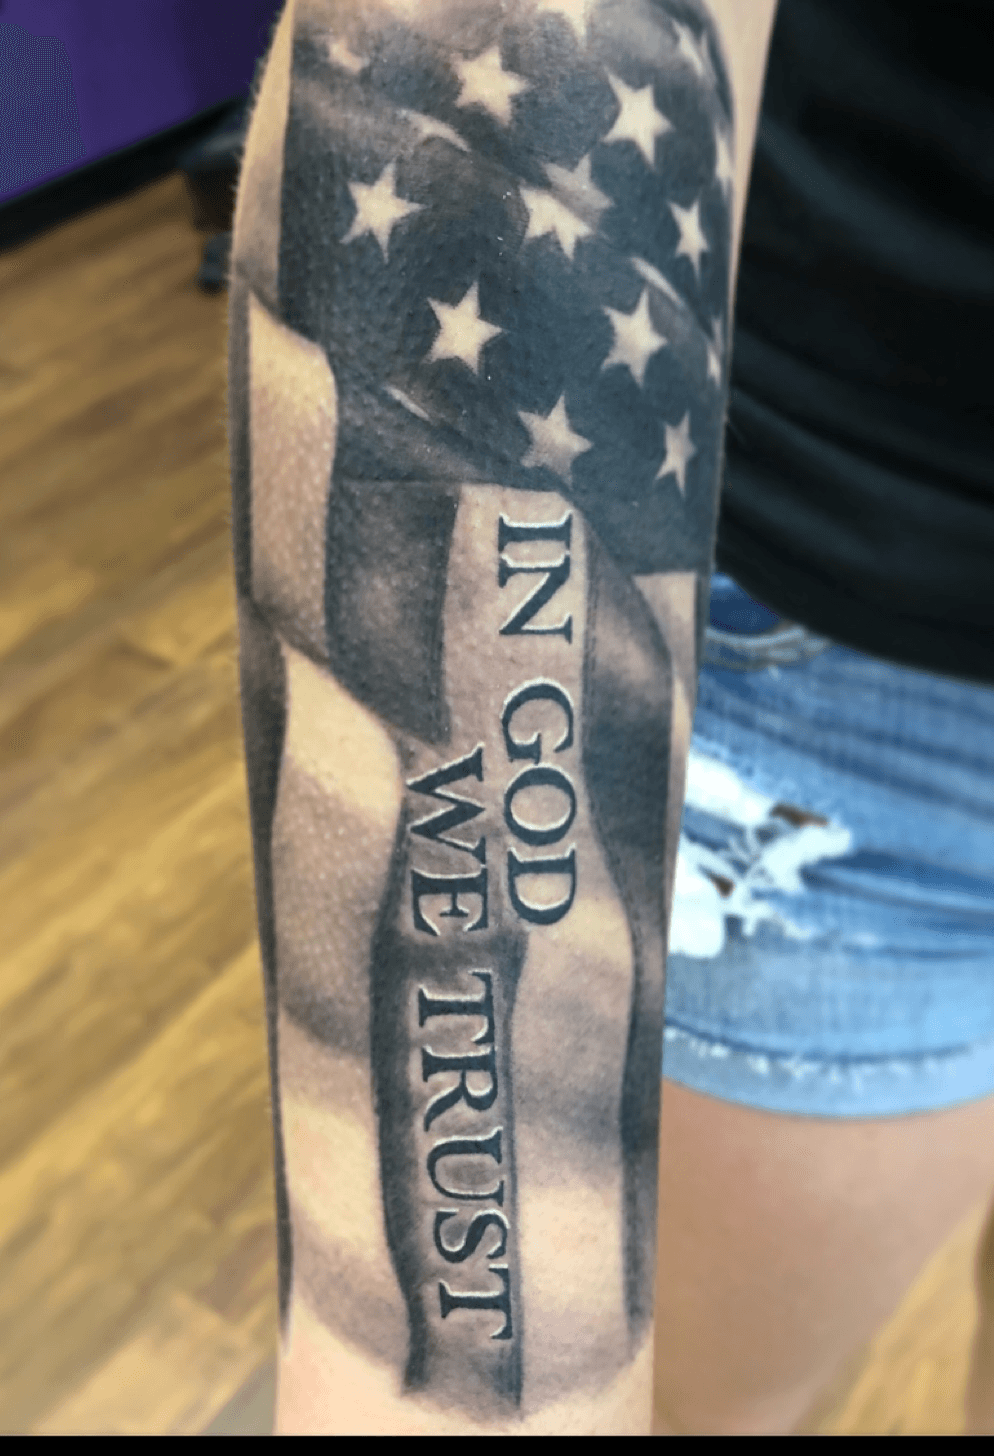 Black and Grey American Flag Tattoo by Drew  TattooNOW